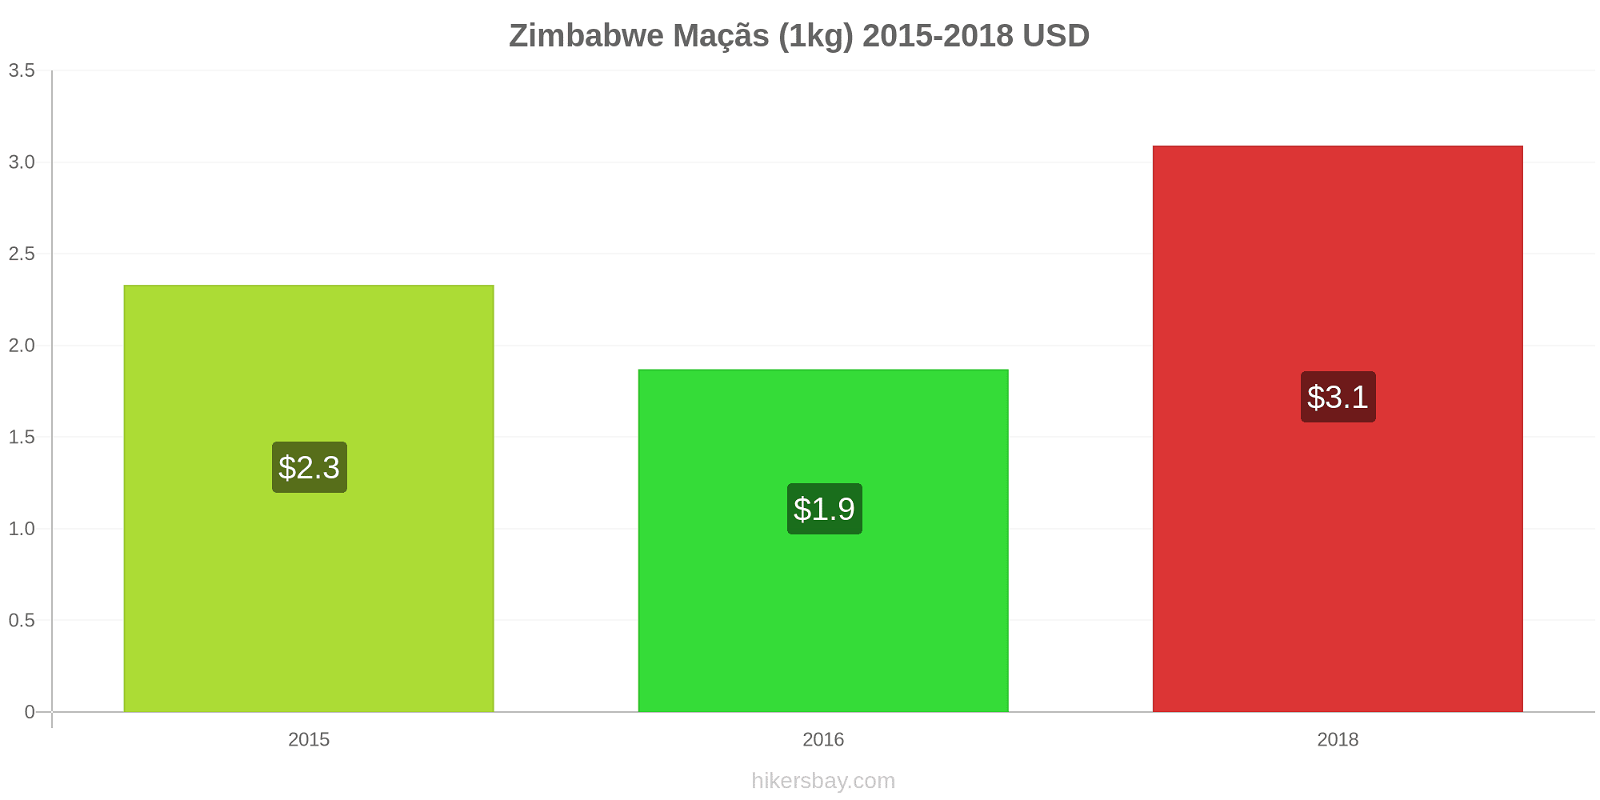 Zimbabwe variação de preço Maçãs (1kg) hikersbay.com